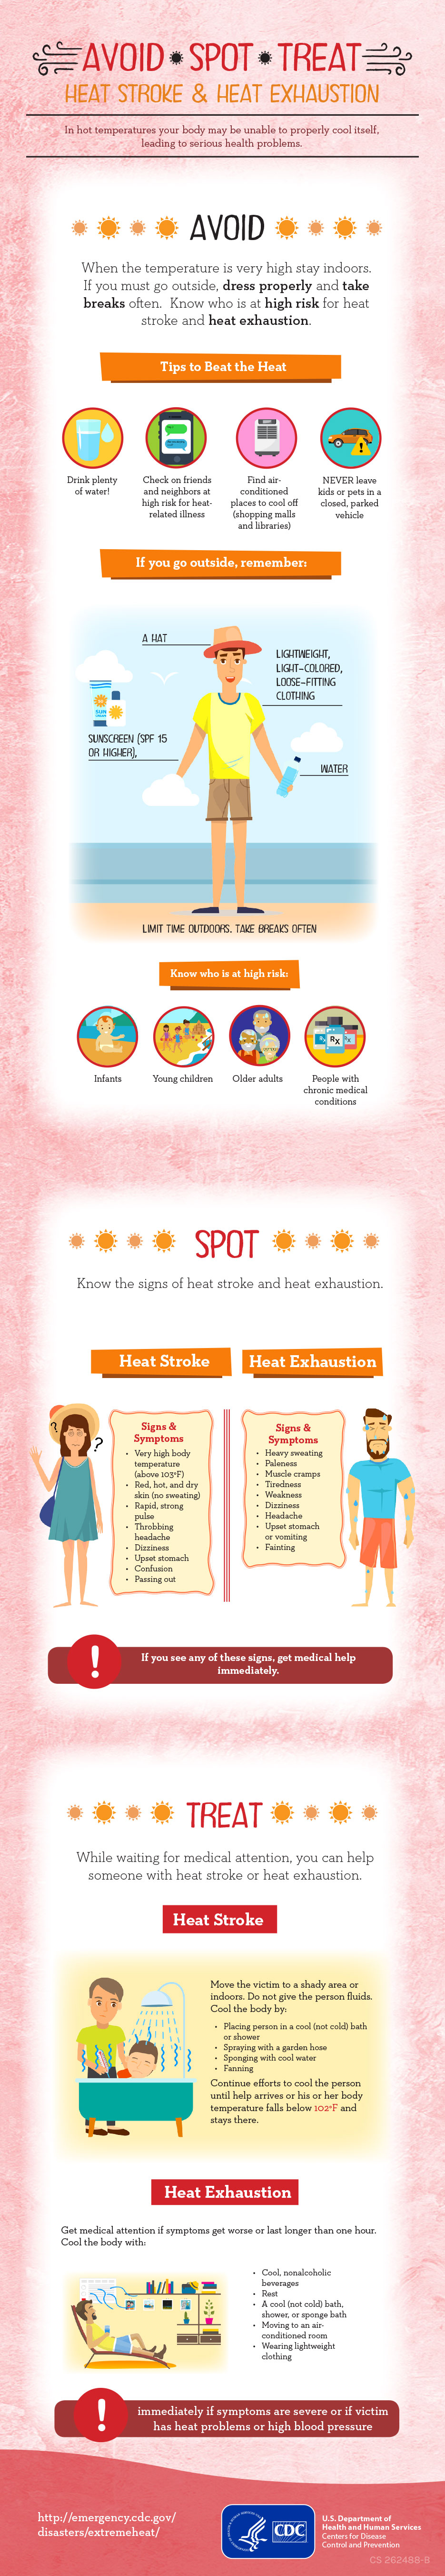 Avoid Spot Treat: Heat Stroke & Heat Exhaustion - Infographic